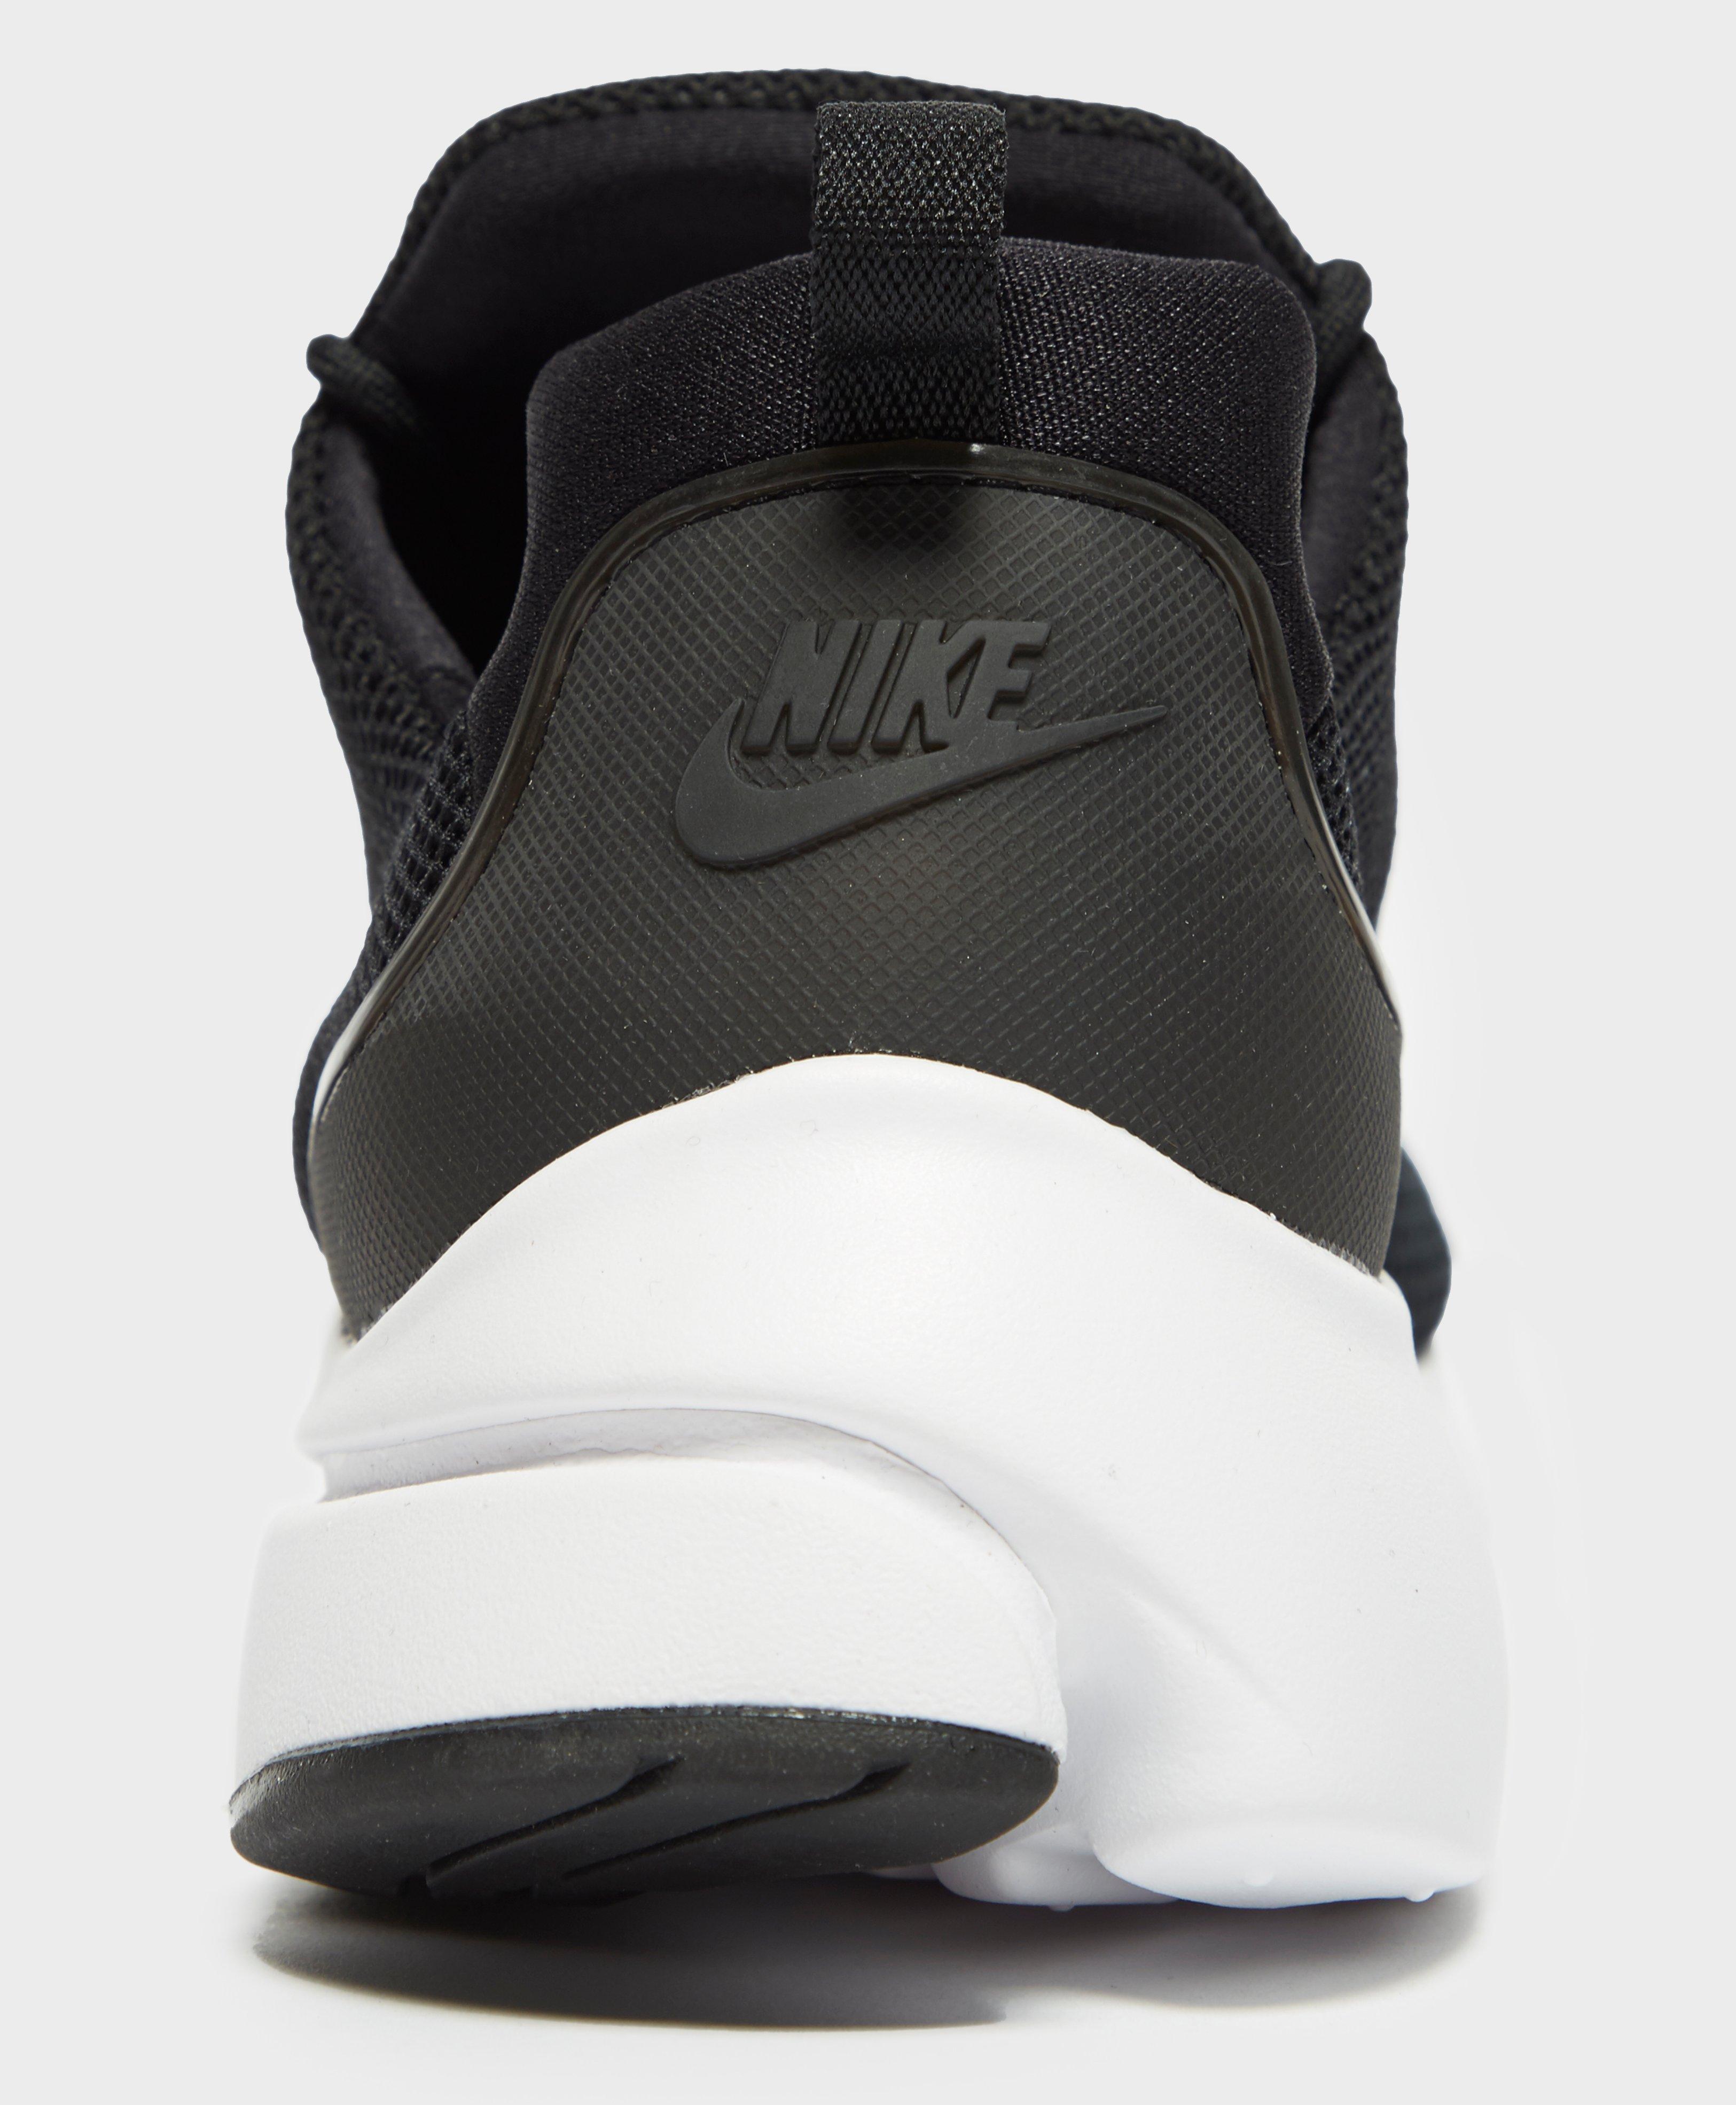 Nike Presto Fly Shoes - Size 11 in Black/White (Black) for Men | Lyst